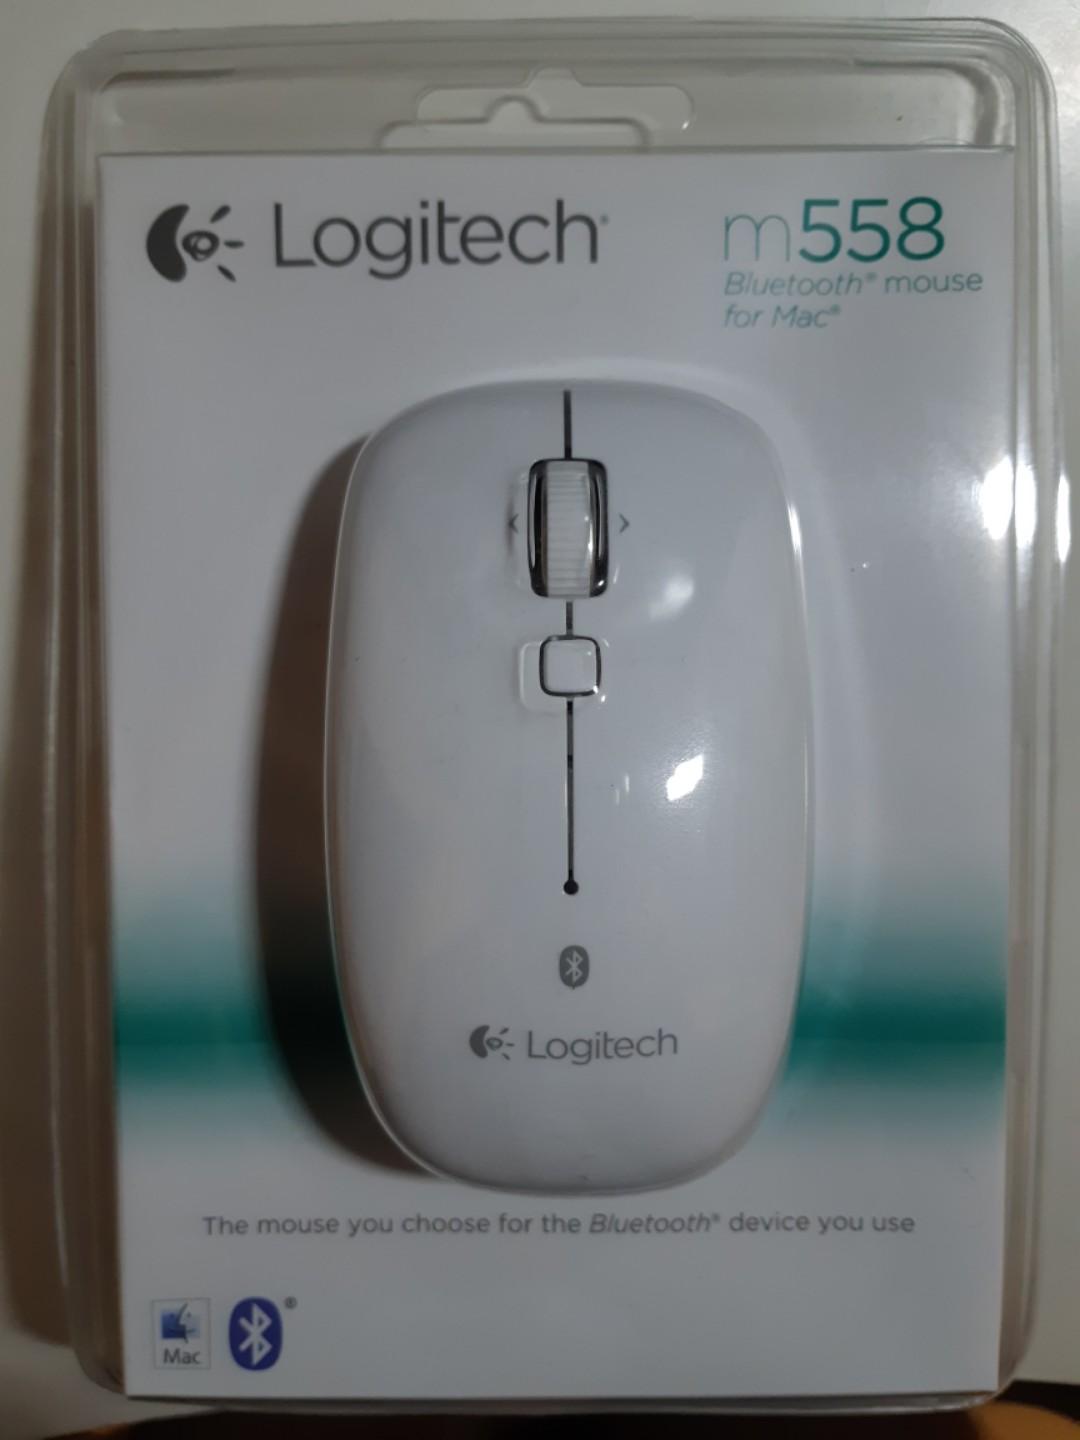 Logitech bluetooth mouse m558 for mac computer